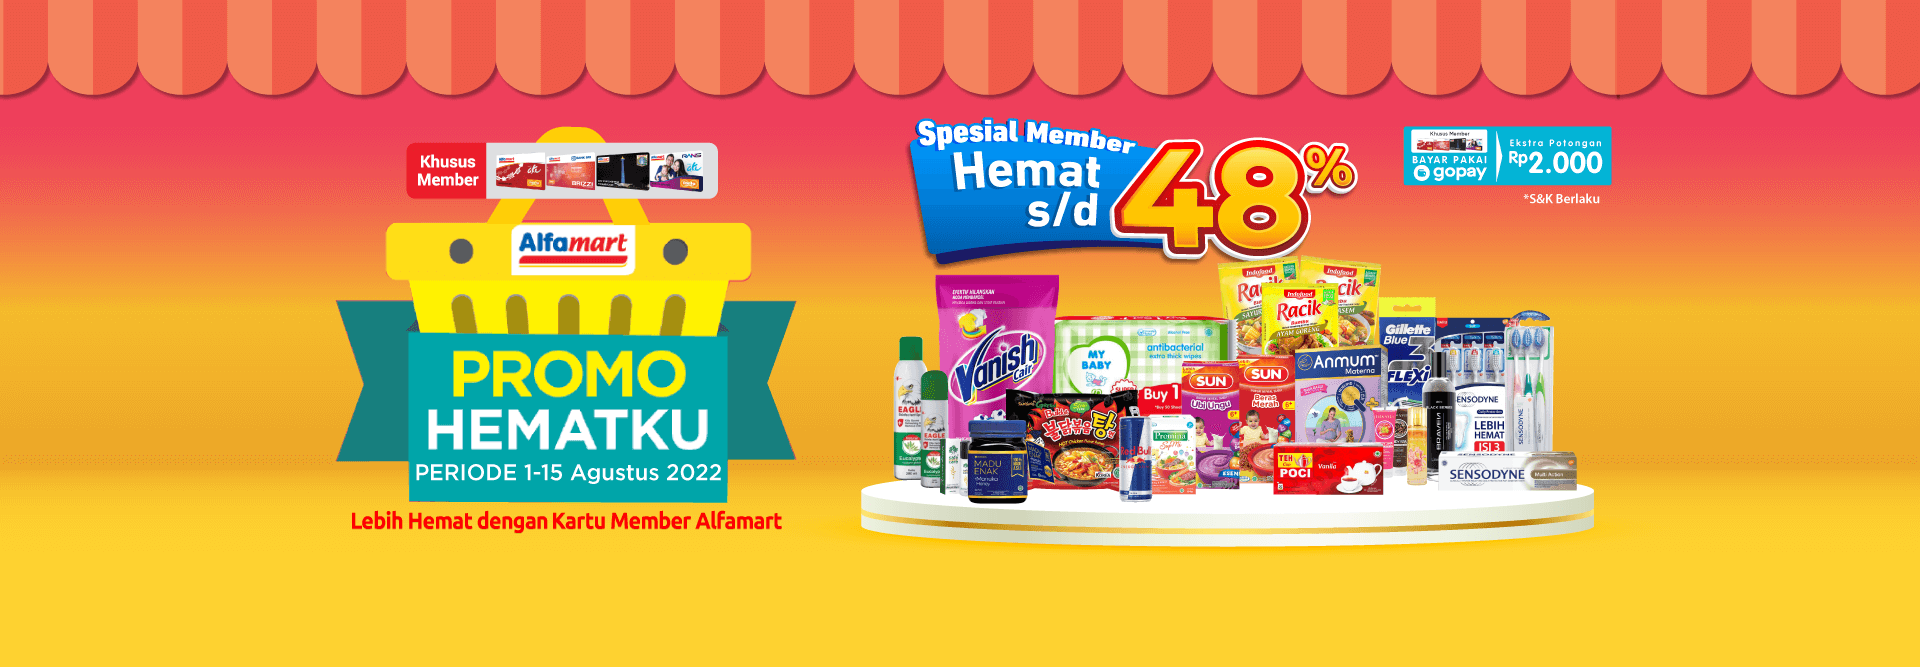 Banner promo Promo Member Hematku Alfamart